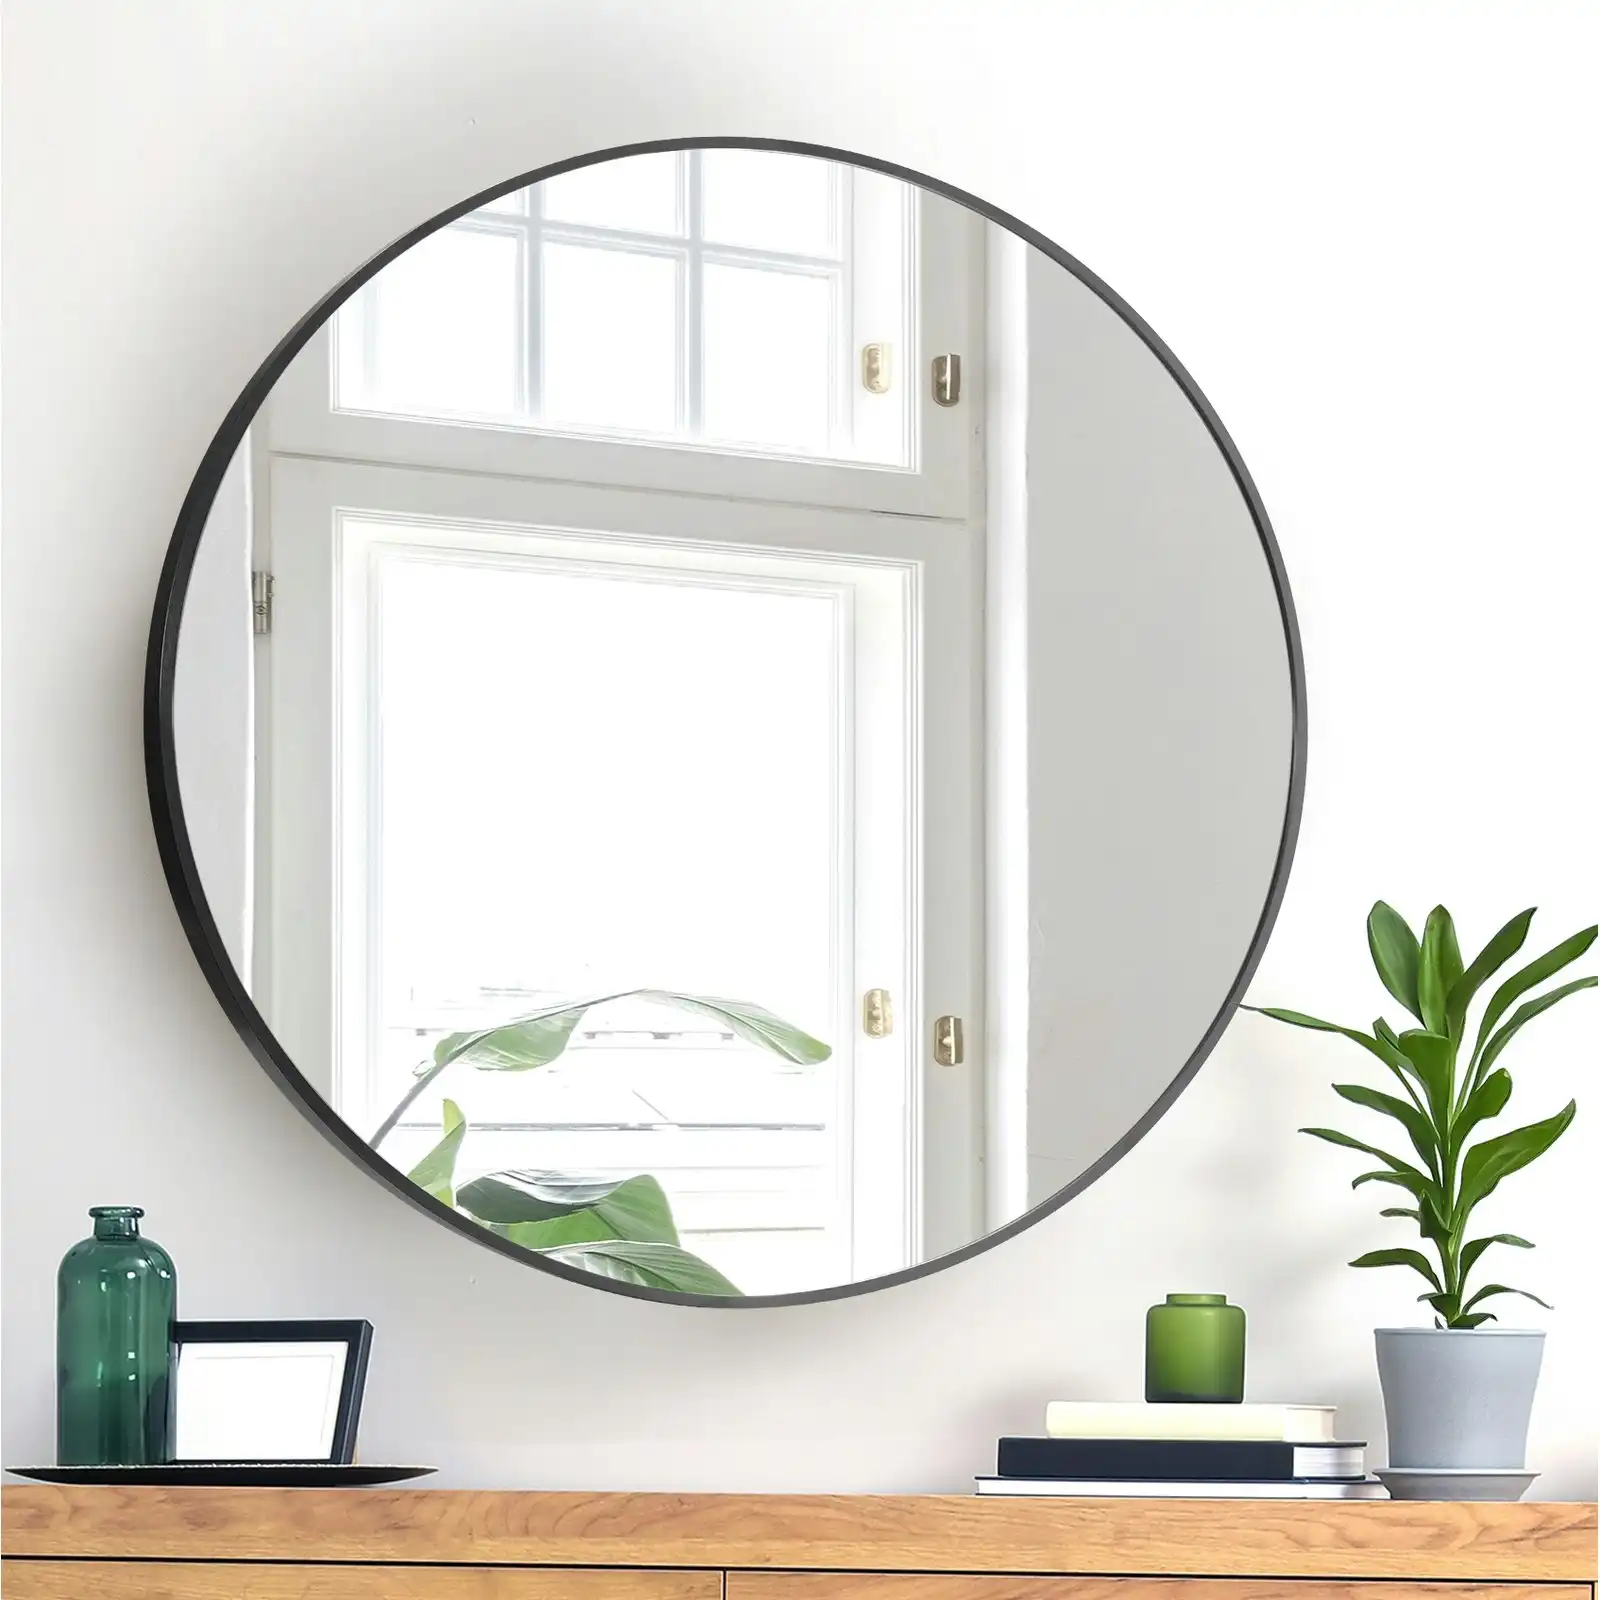 Oikiture Wall Mirrors Round 70cm Makeup Mirror Vanity Home Decor Black